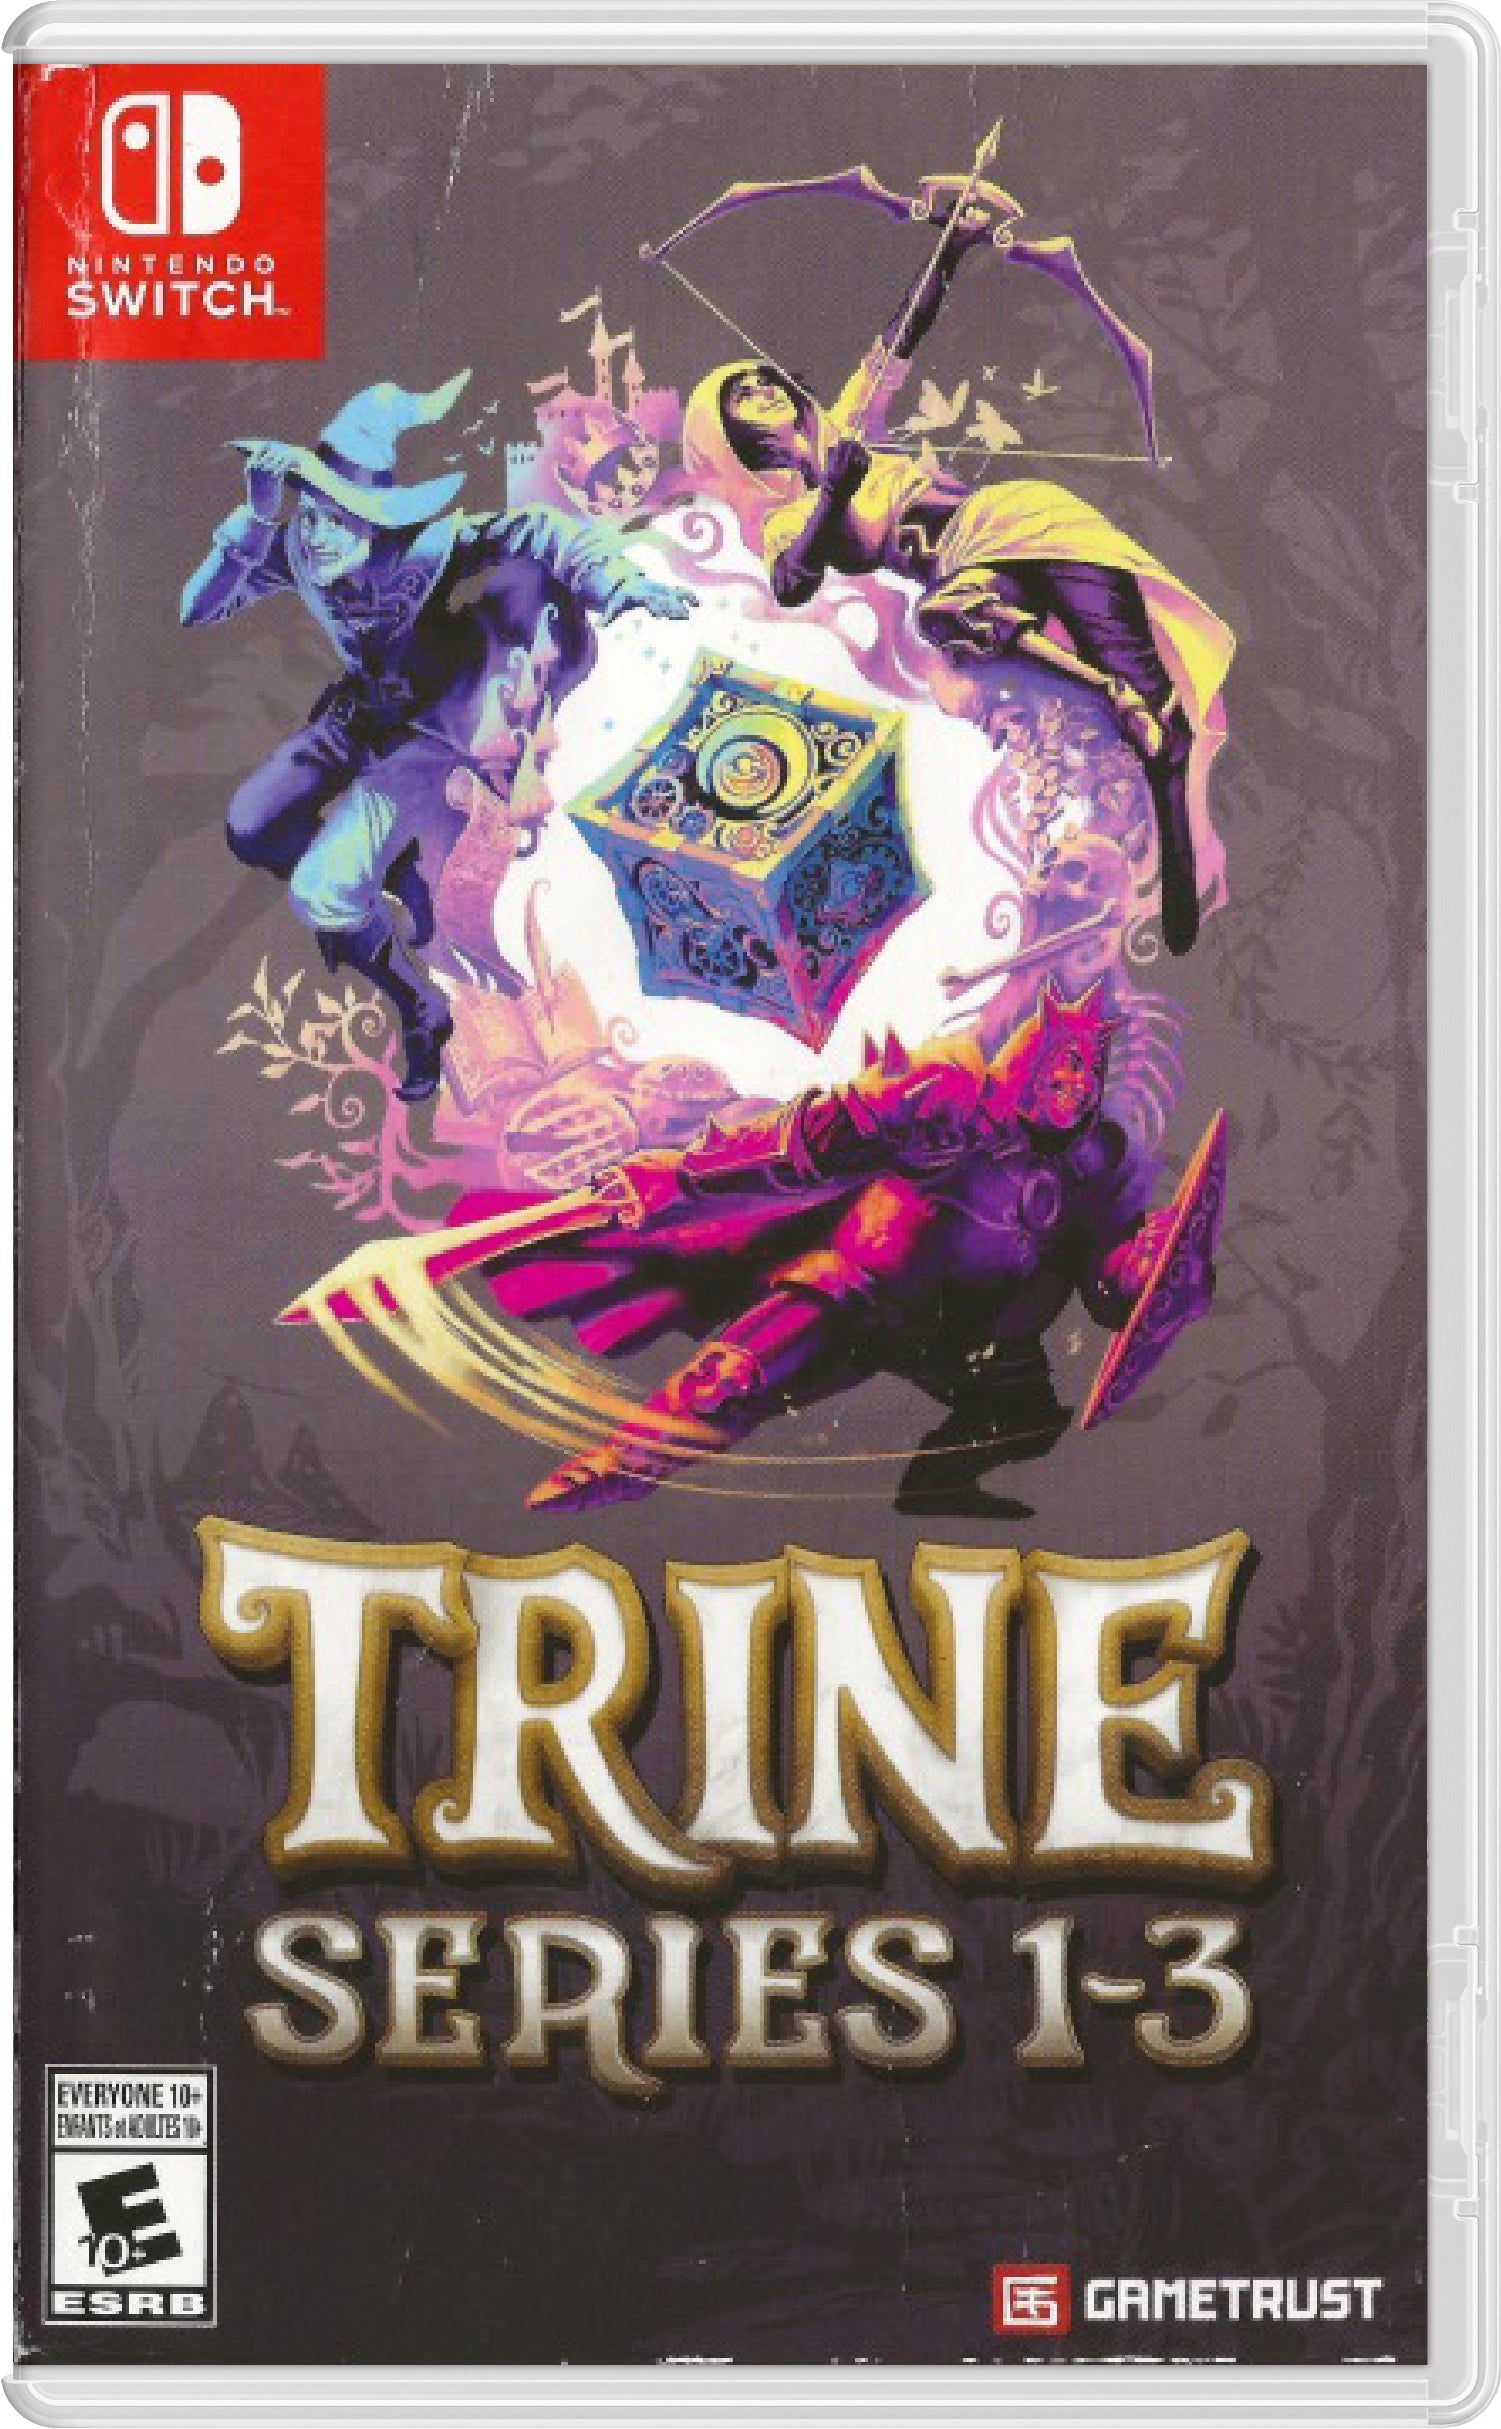 Trine Series 1-3 Cover Art